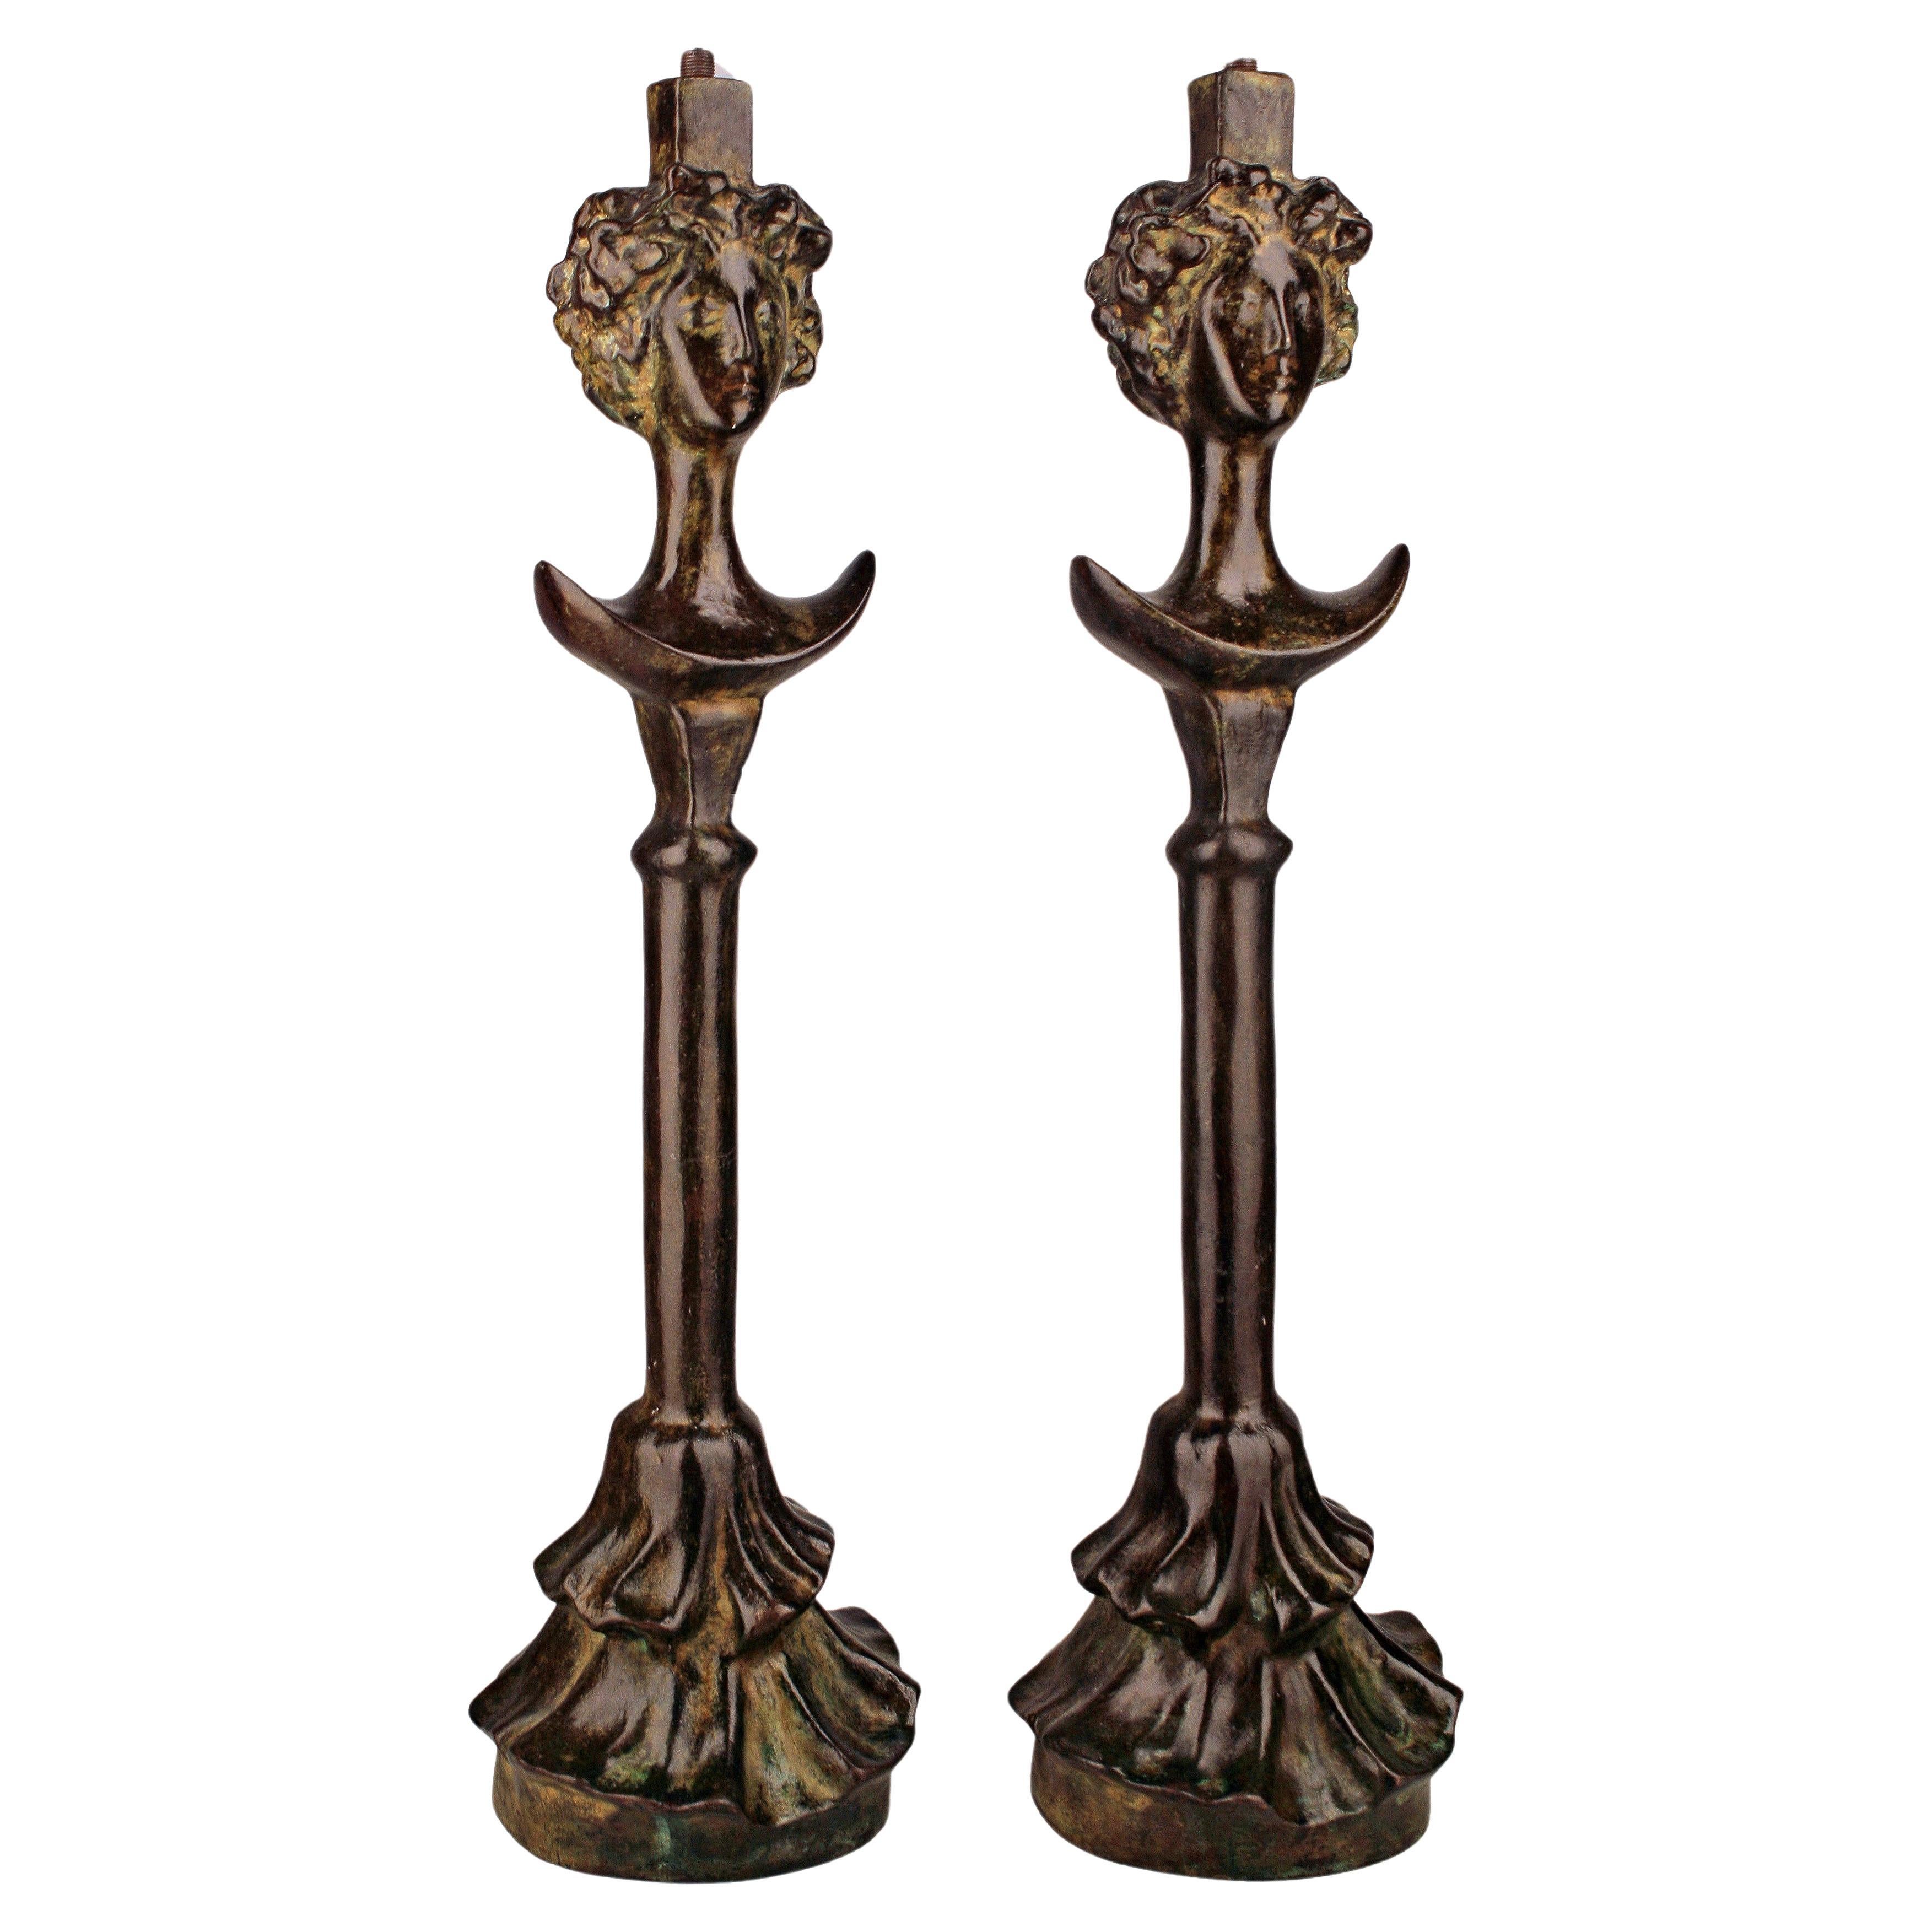 Rockefeller Collection's Bronze Lamps Set Based on Giacometti's 'Tête de Femme'